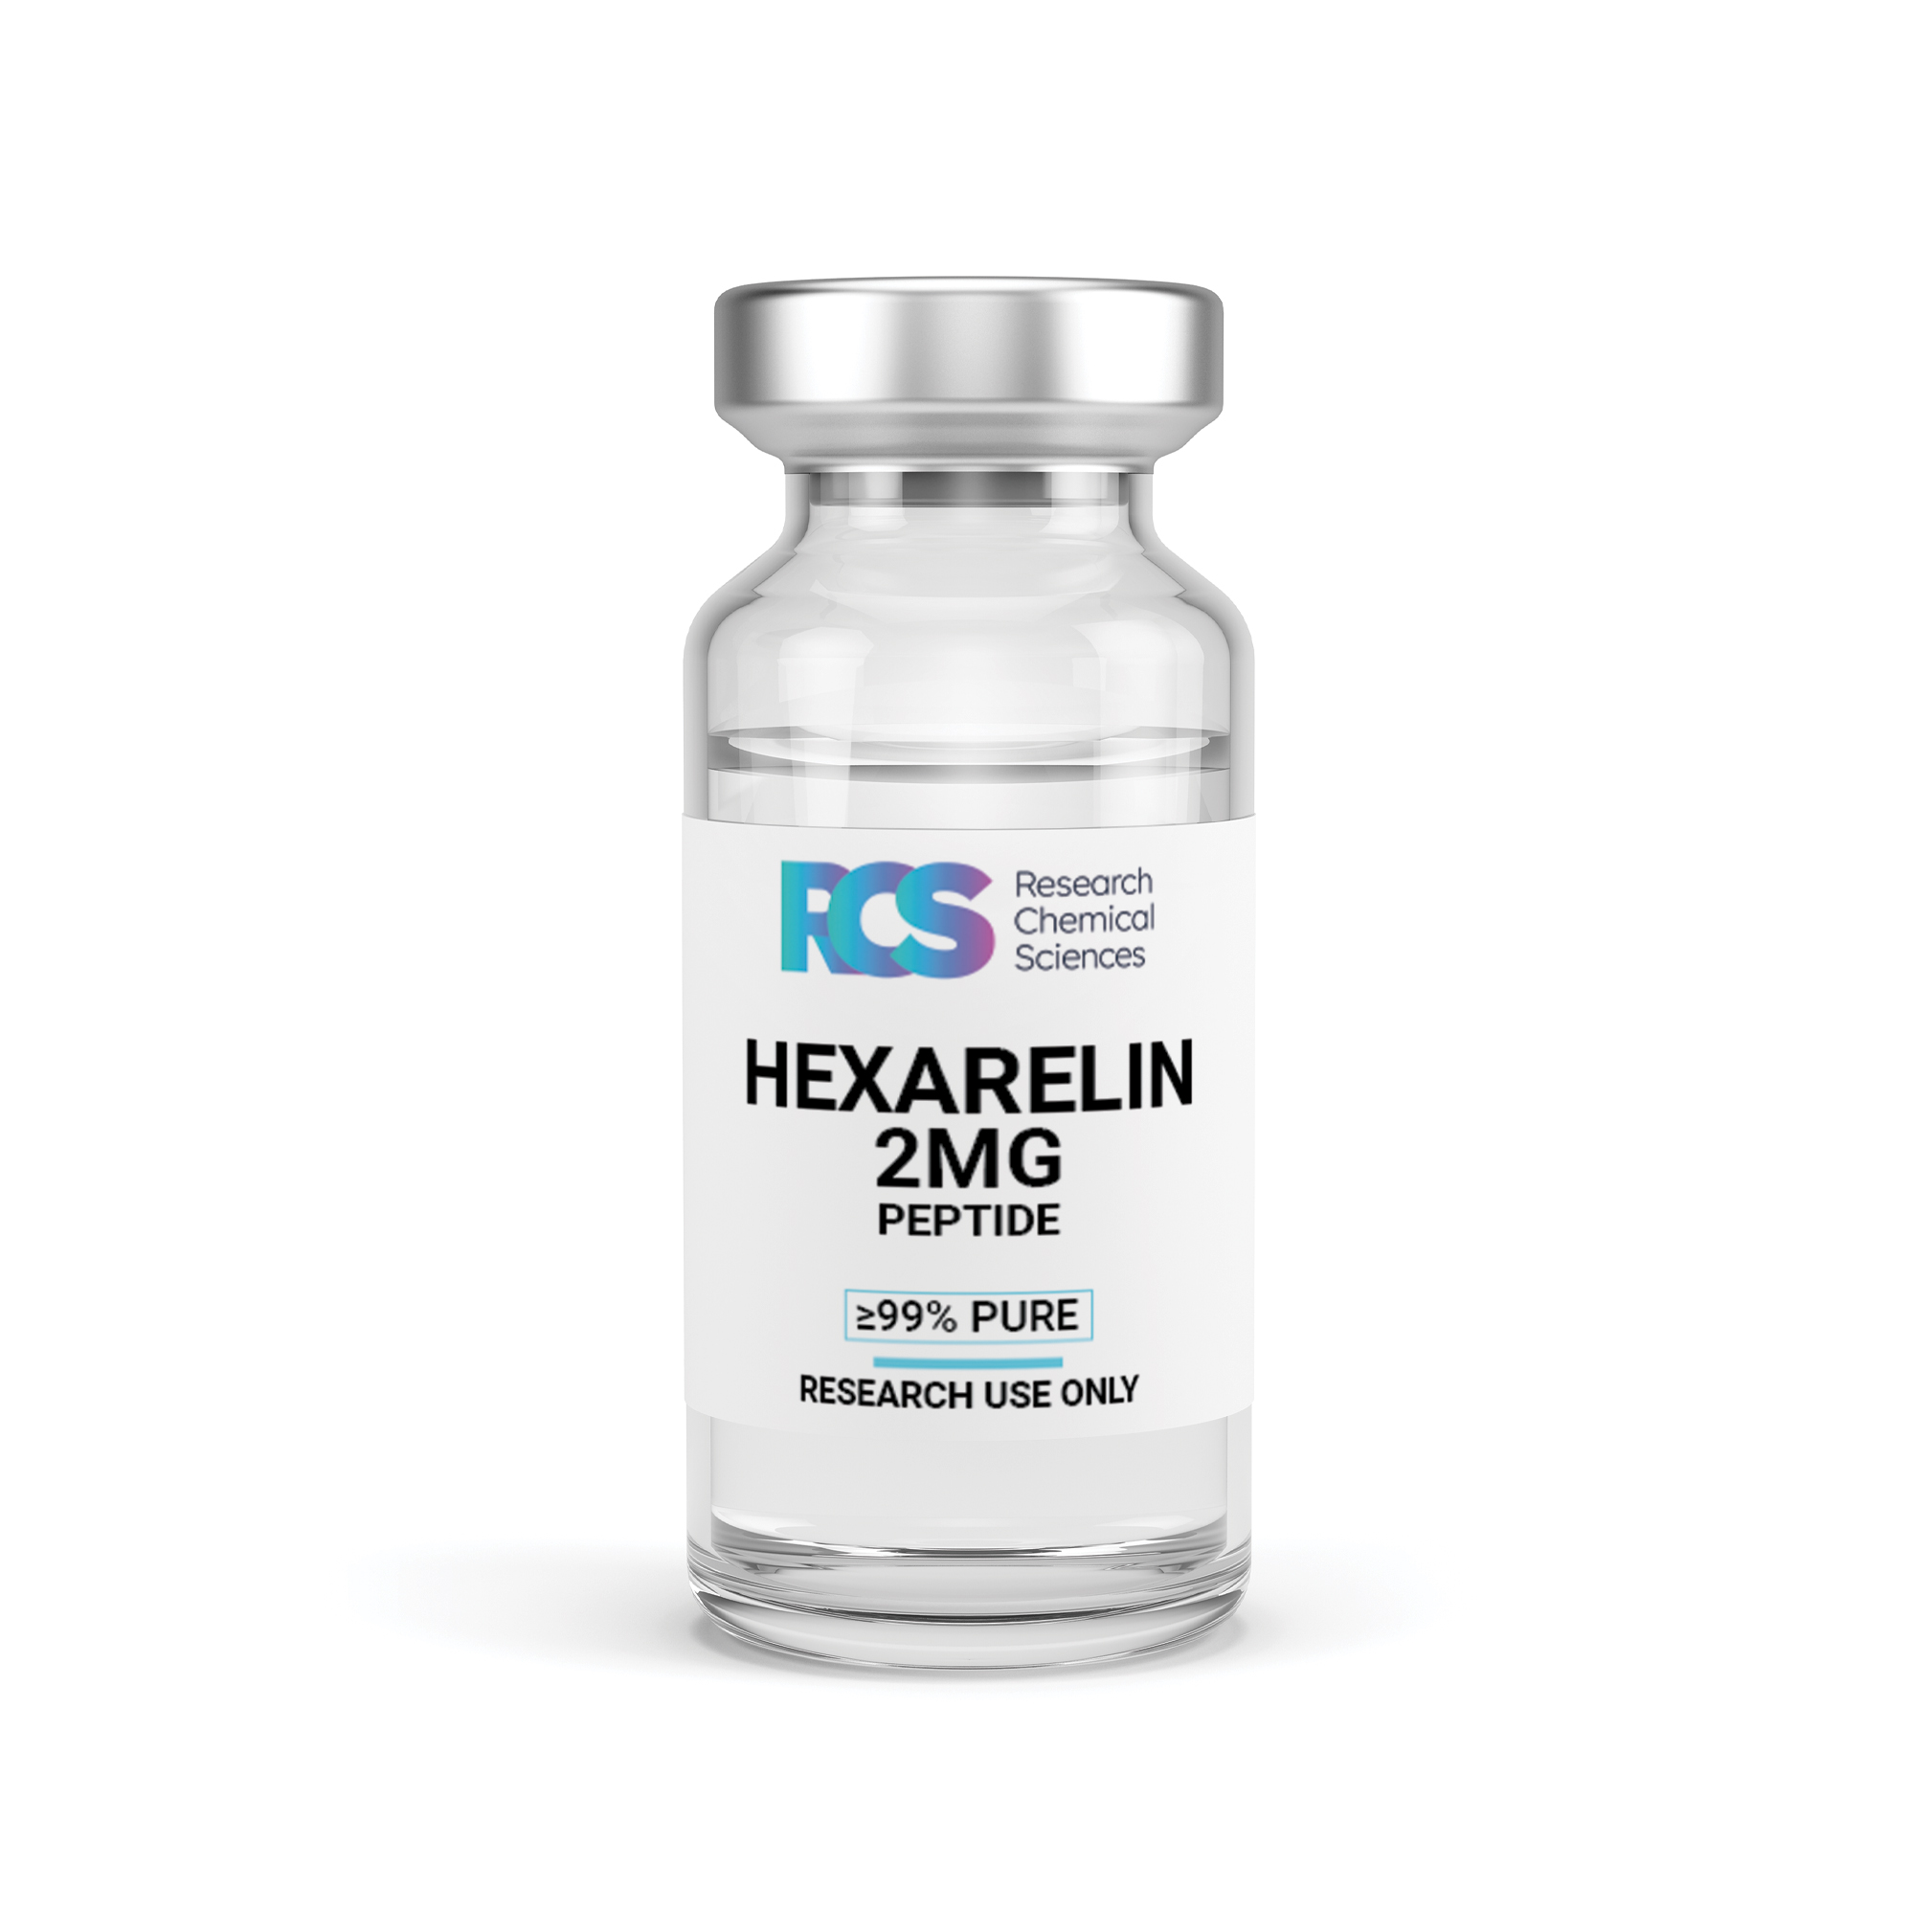 RCS-Hexarelin-Peptide-2MG-Side-1